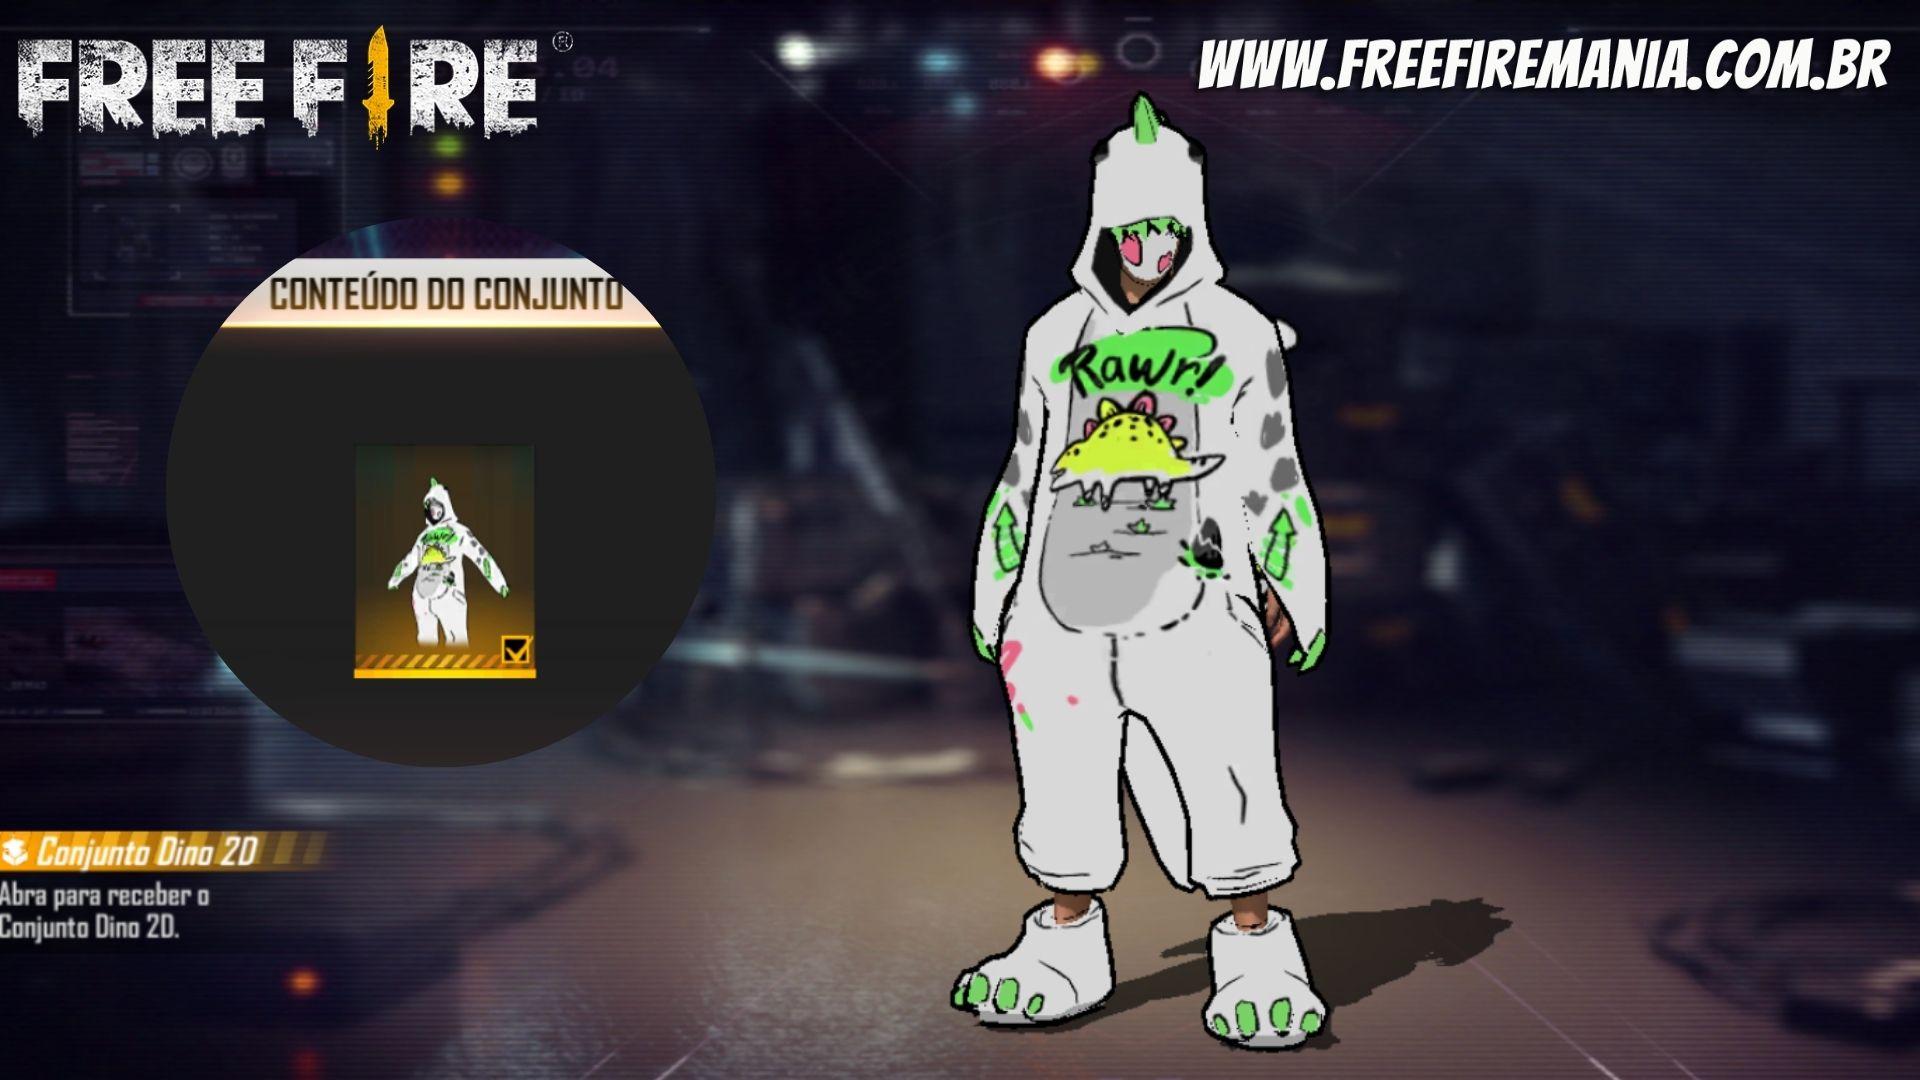 Free Fire lanza a Dino en forma de dibujo: “Dino 20” | Free Fire Mania